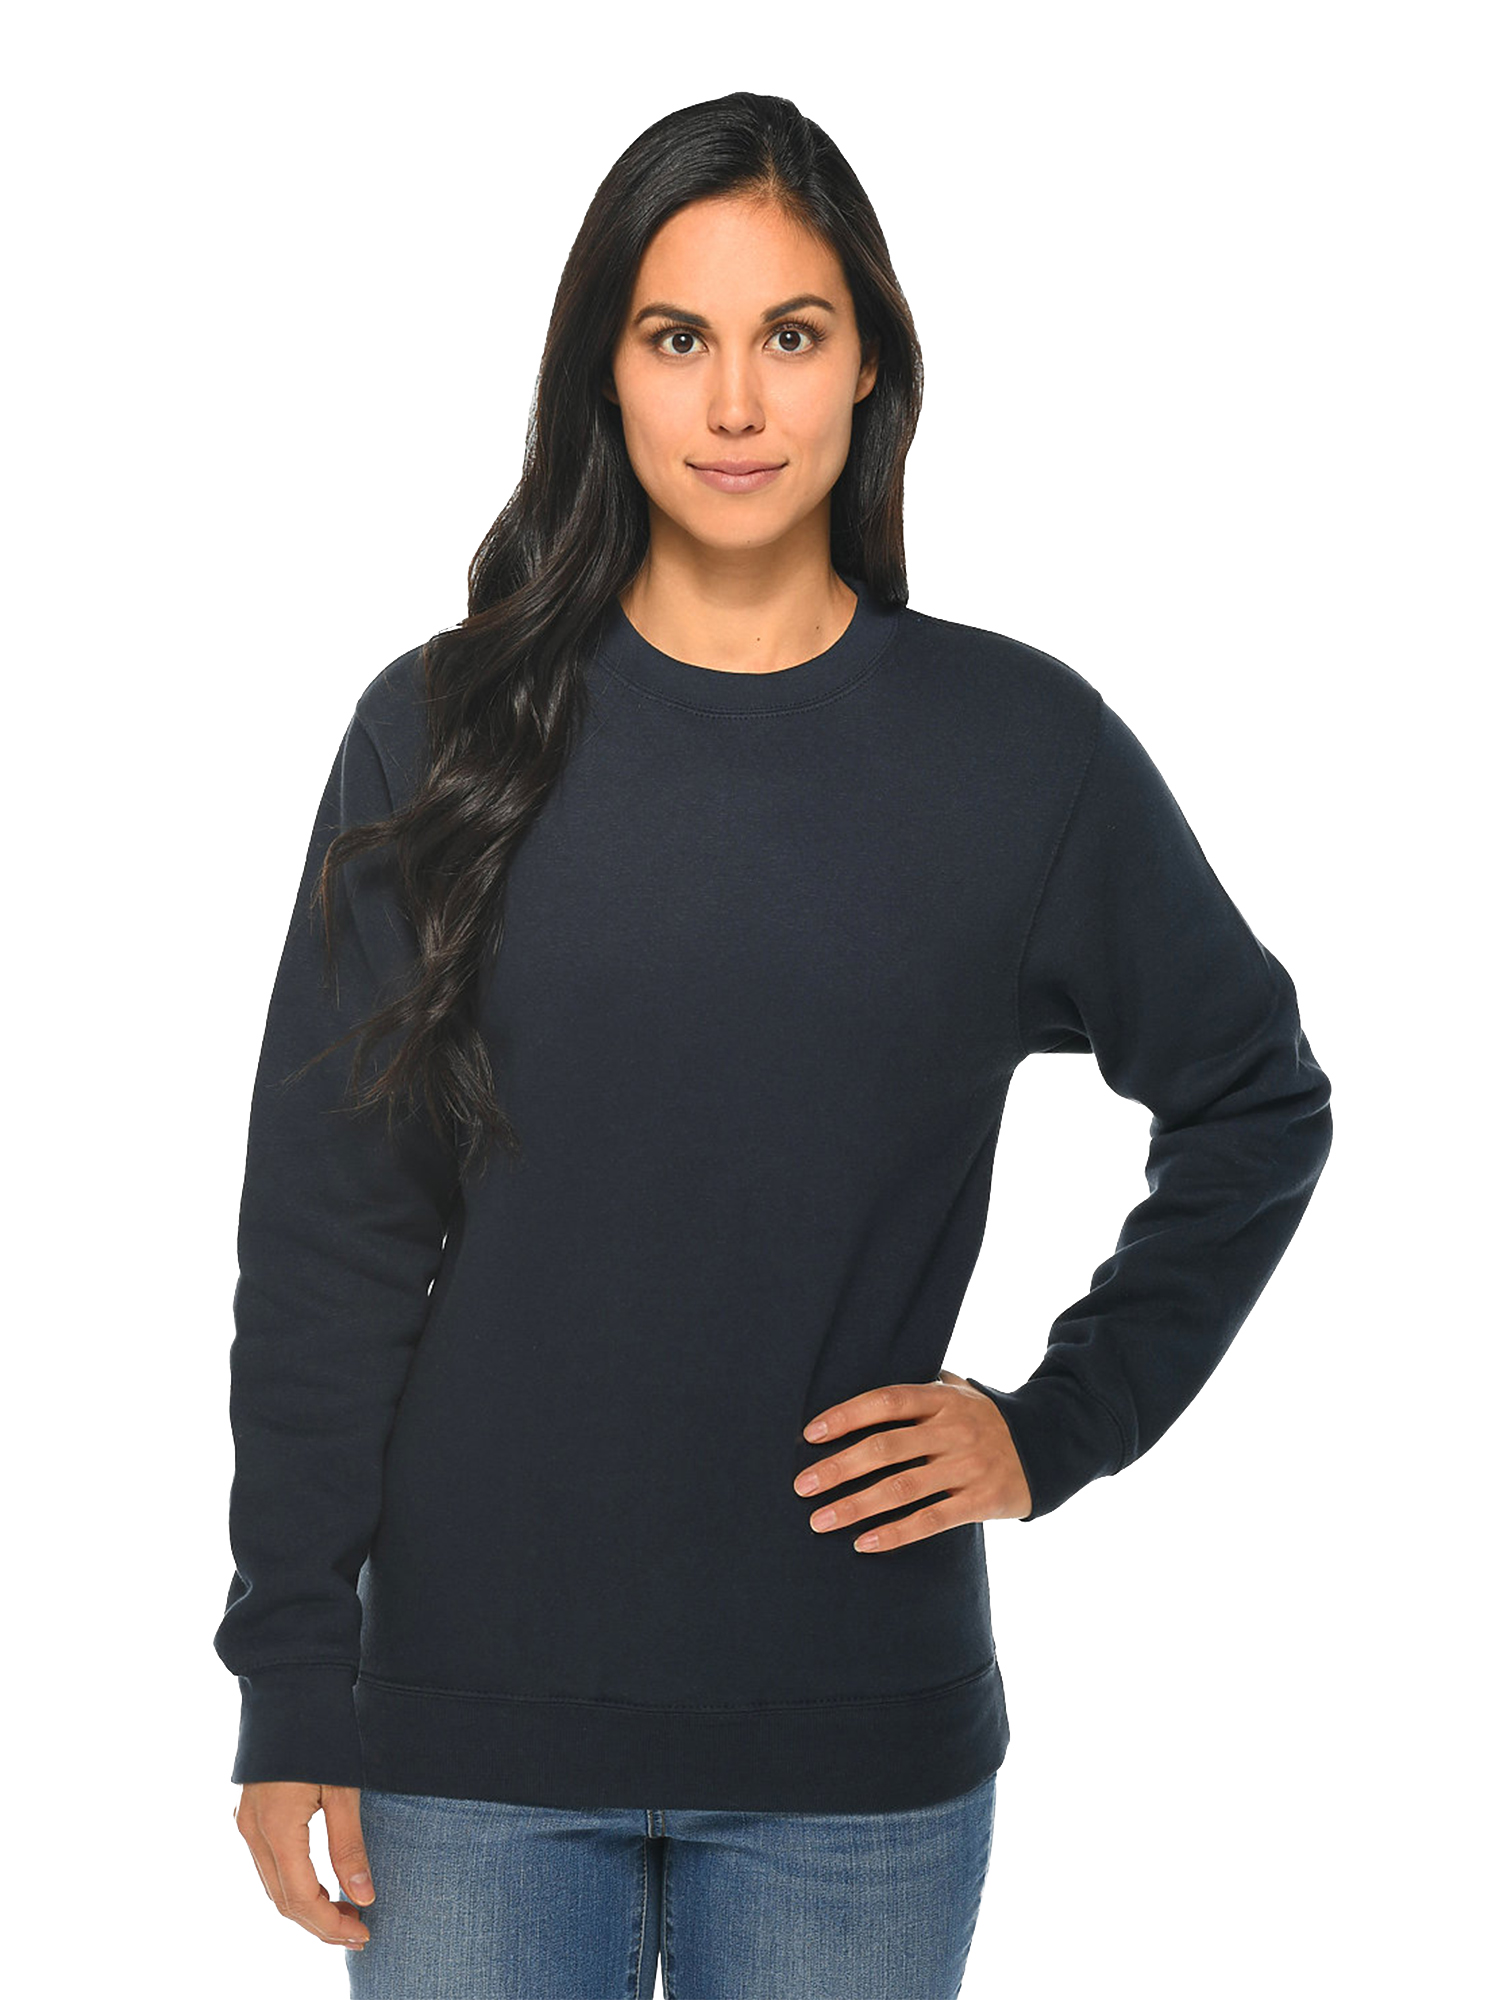 Navy Sweatshirts for Men Womens Sweatshirt Casual Plain Long Sleeve Navy Blue Sweaters for Women and Men - image 2 of 5